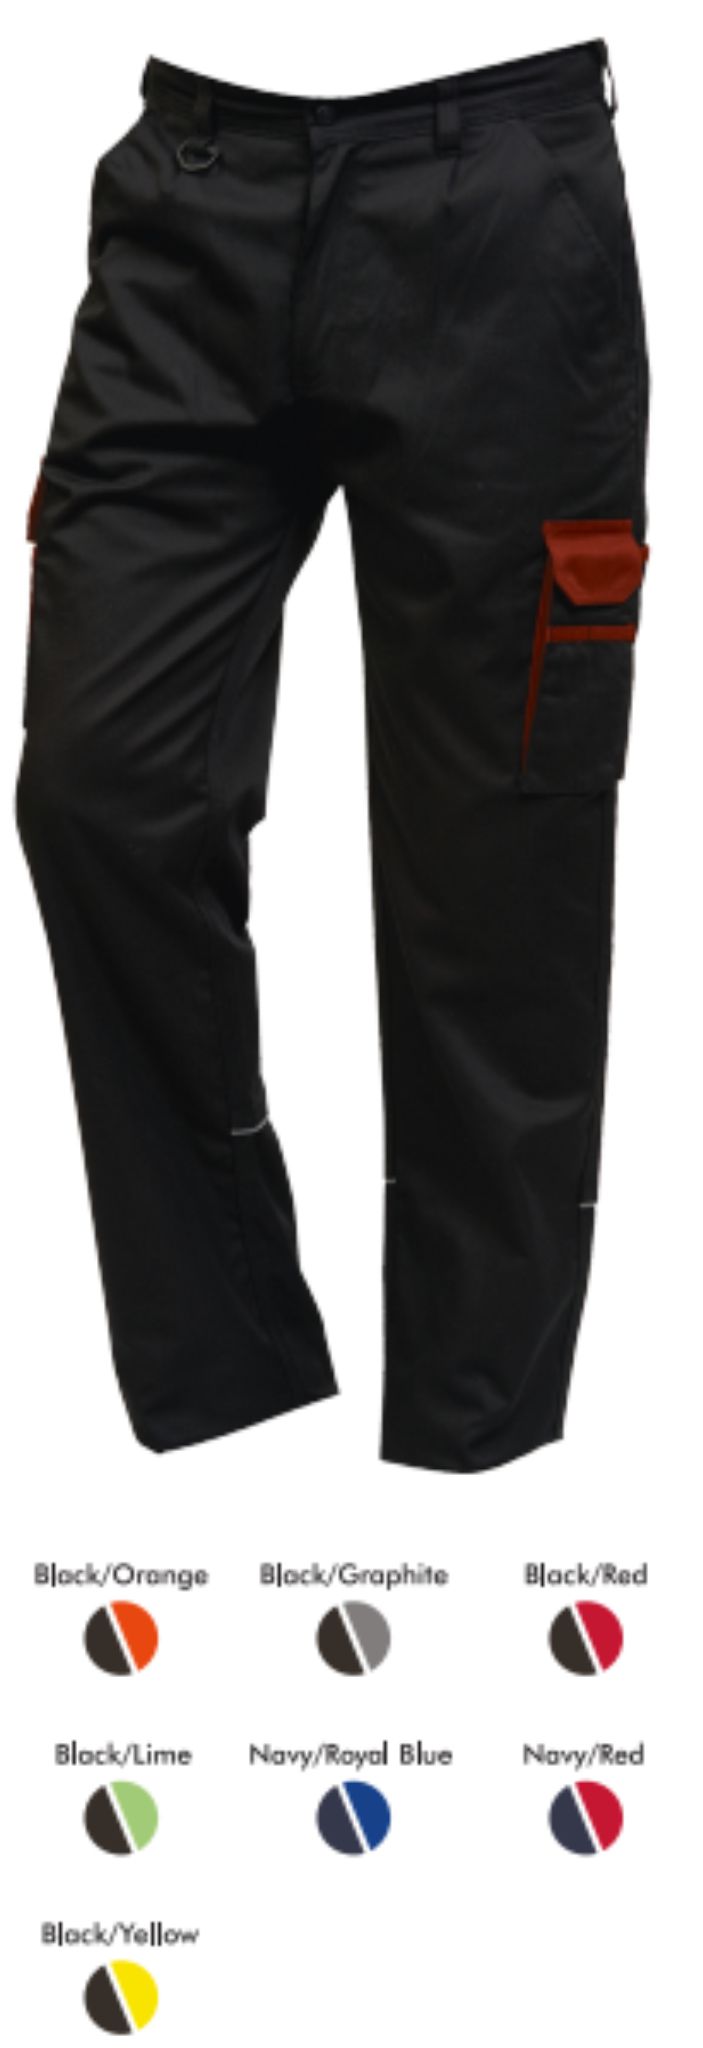 Orn Silverswift 2580 Combat Trousers